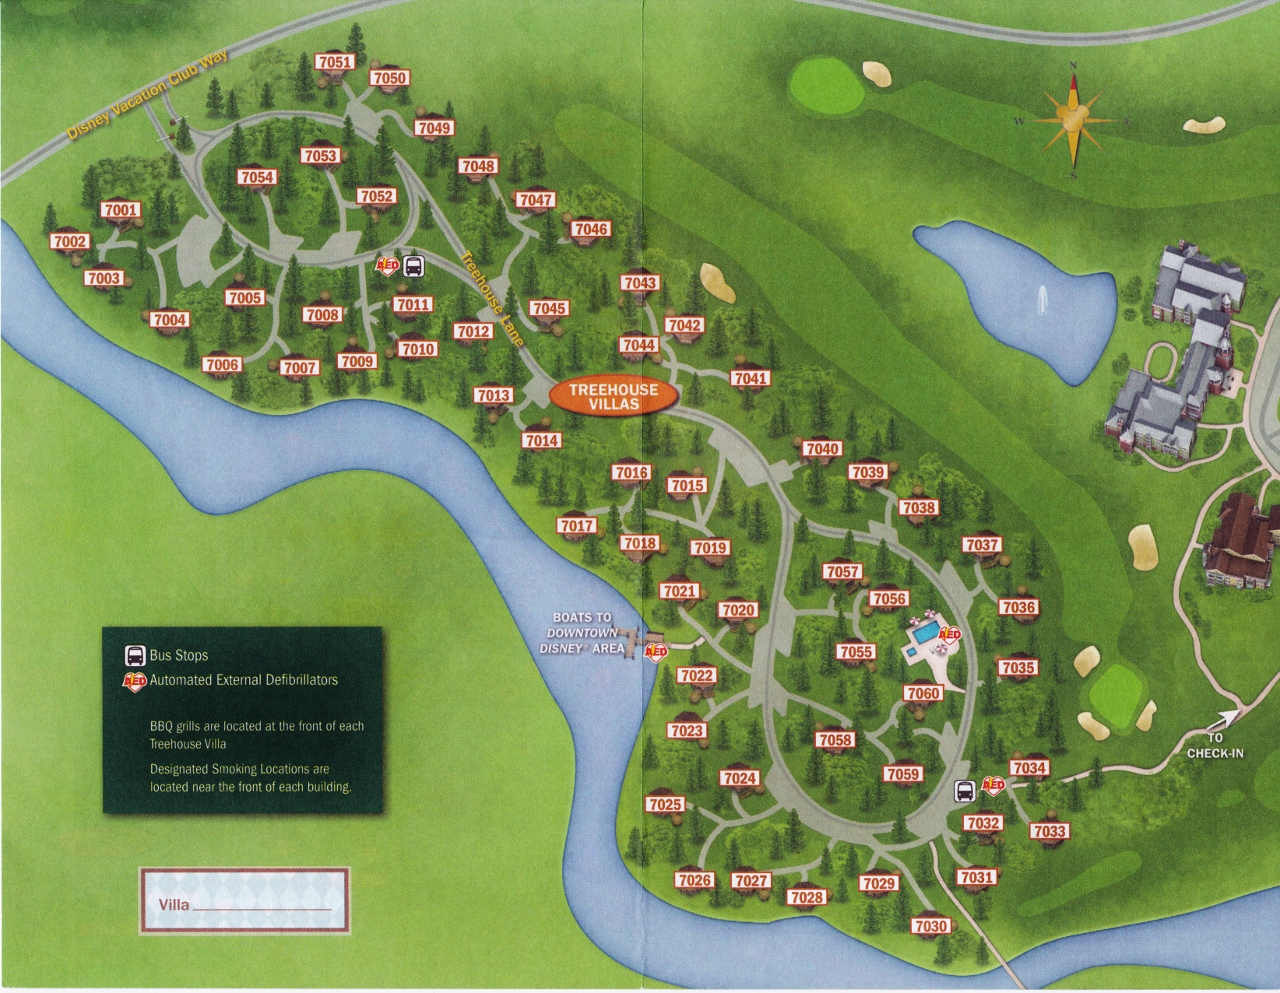 Treehouse Villas Map (1280x993)